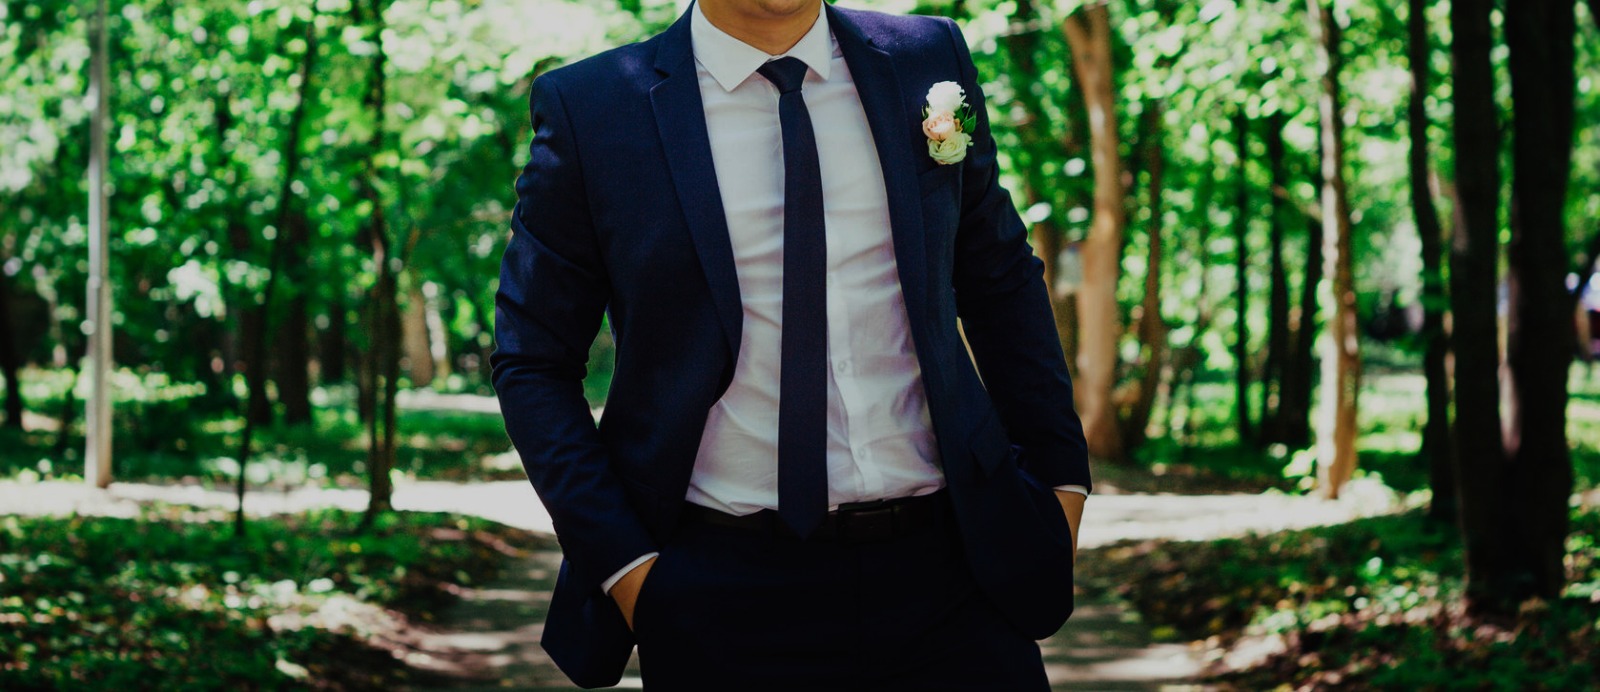 What Do Men Wear to a Summer Wedding?